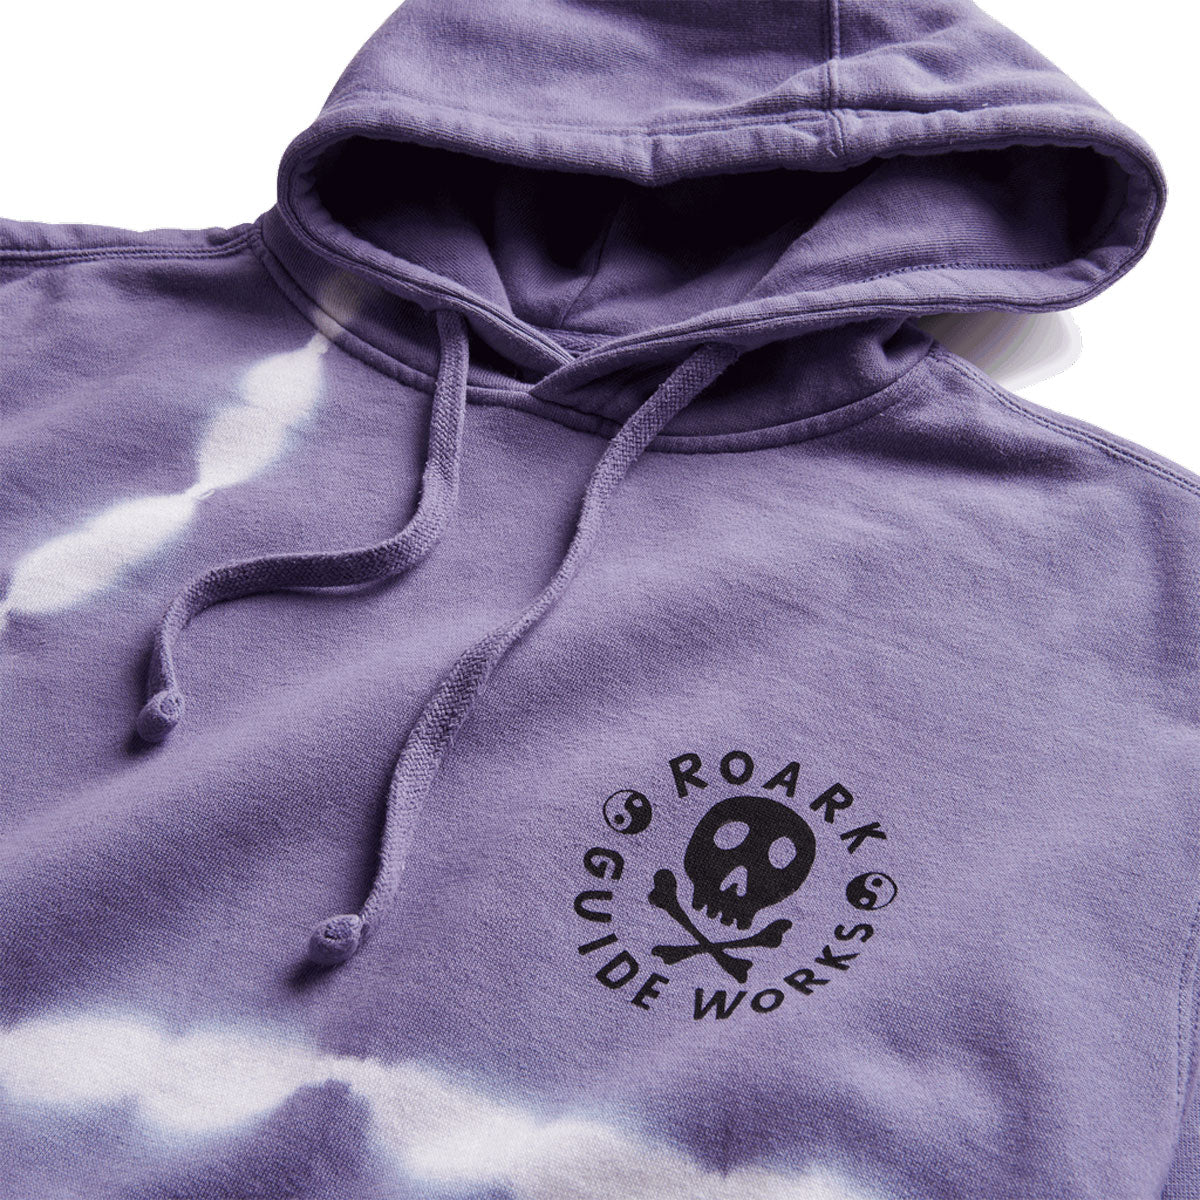 Roark Guideworks Hoodie - Purple Haze Shibori image 5